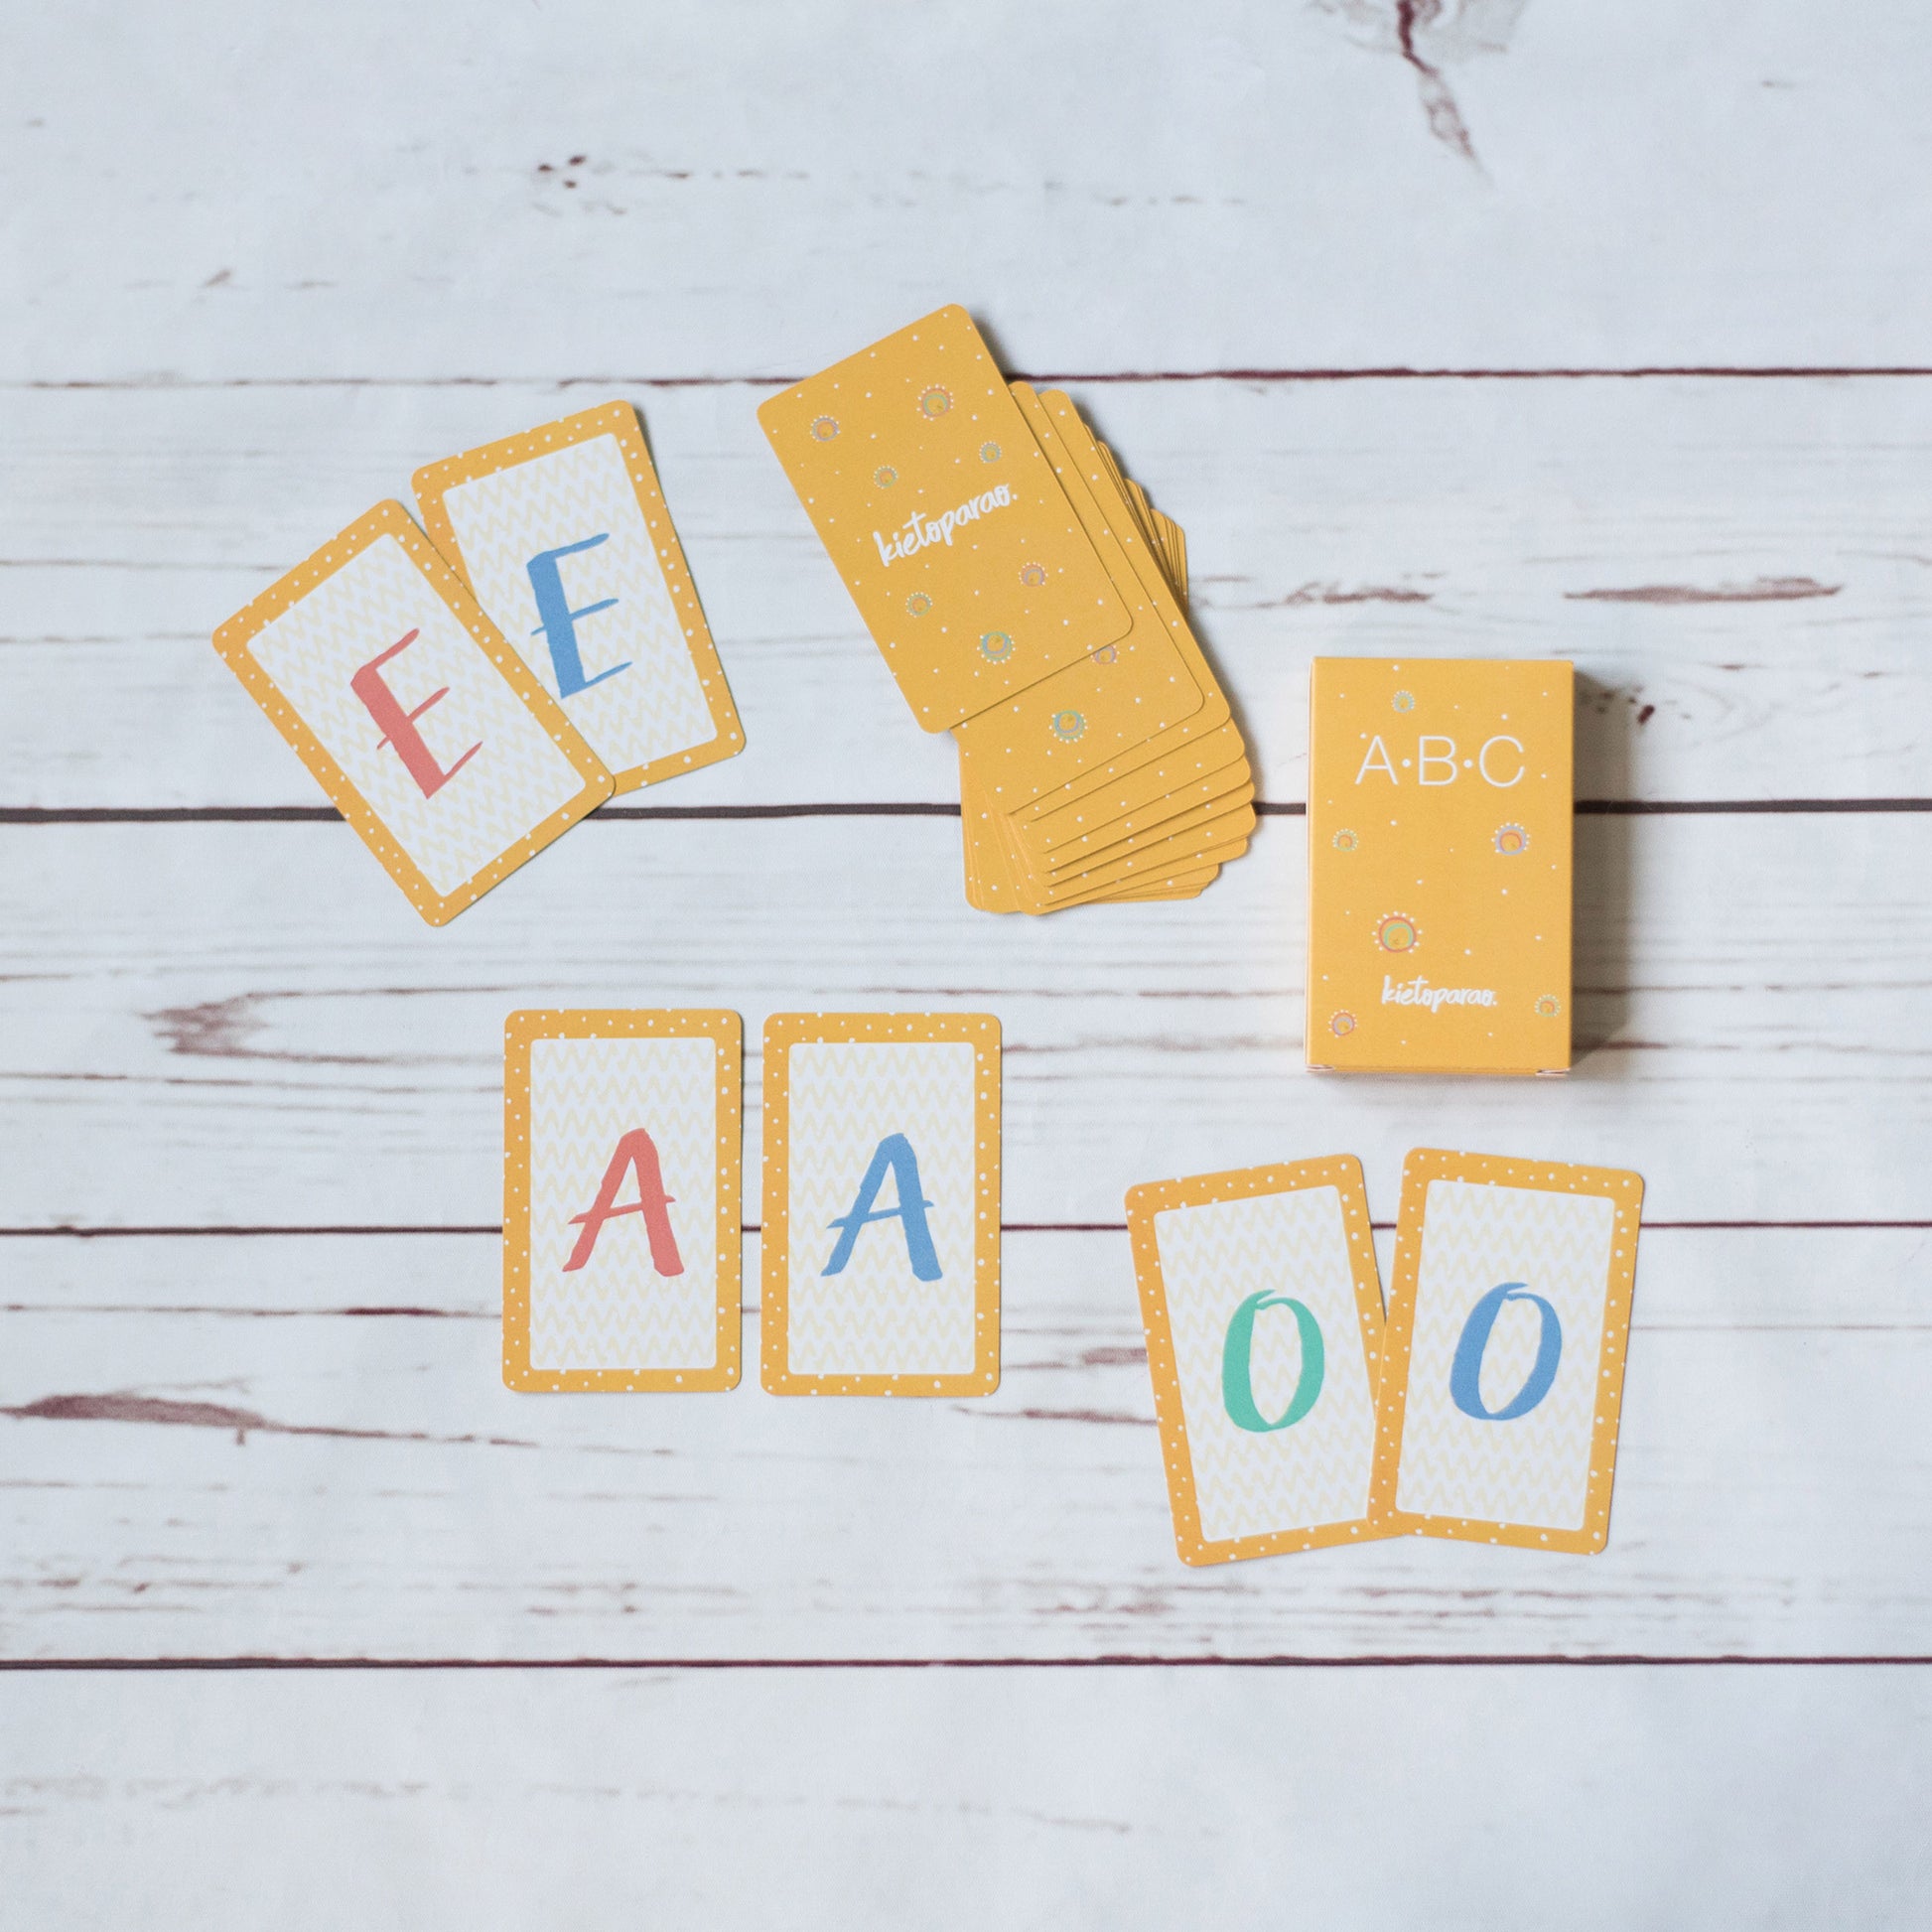 Kietoparao kit starter baraja para aprender las letras +3 años